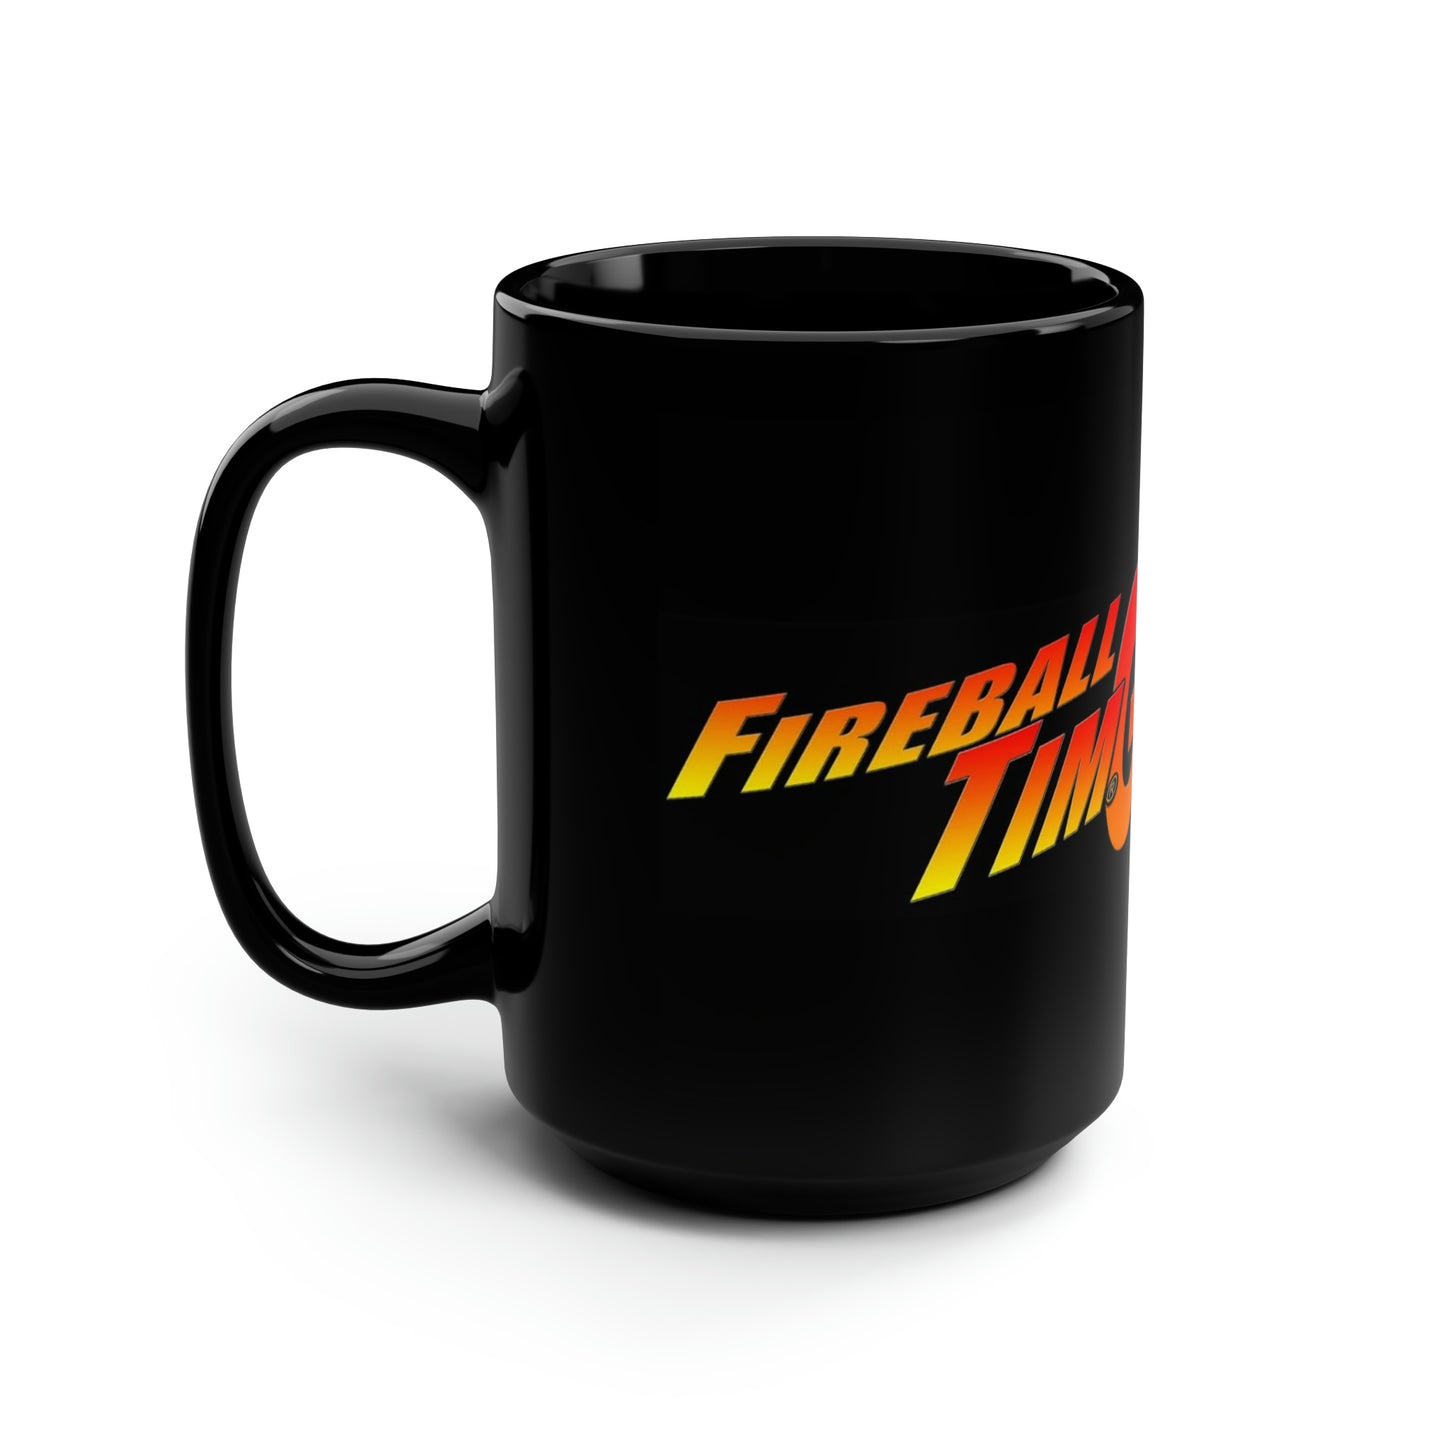 Fireball Tim GARAGE Black Mug 15oz